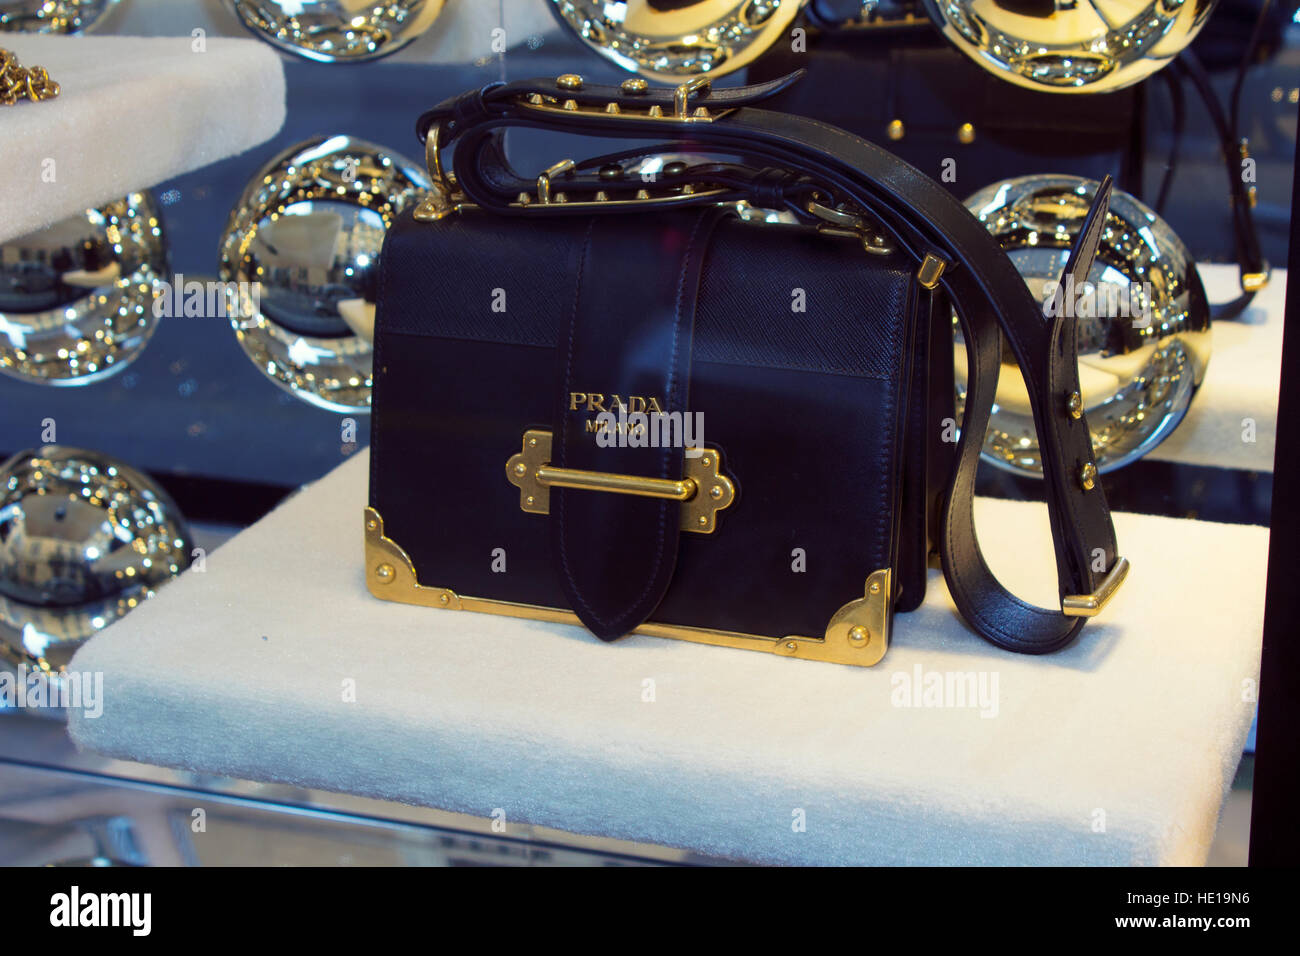 Elegant prada handbag For Stylish And Trendy Looks 